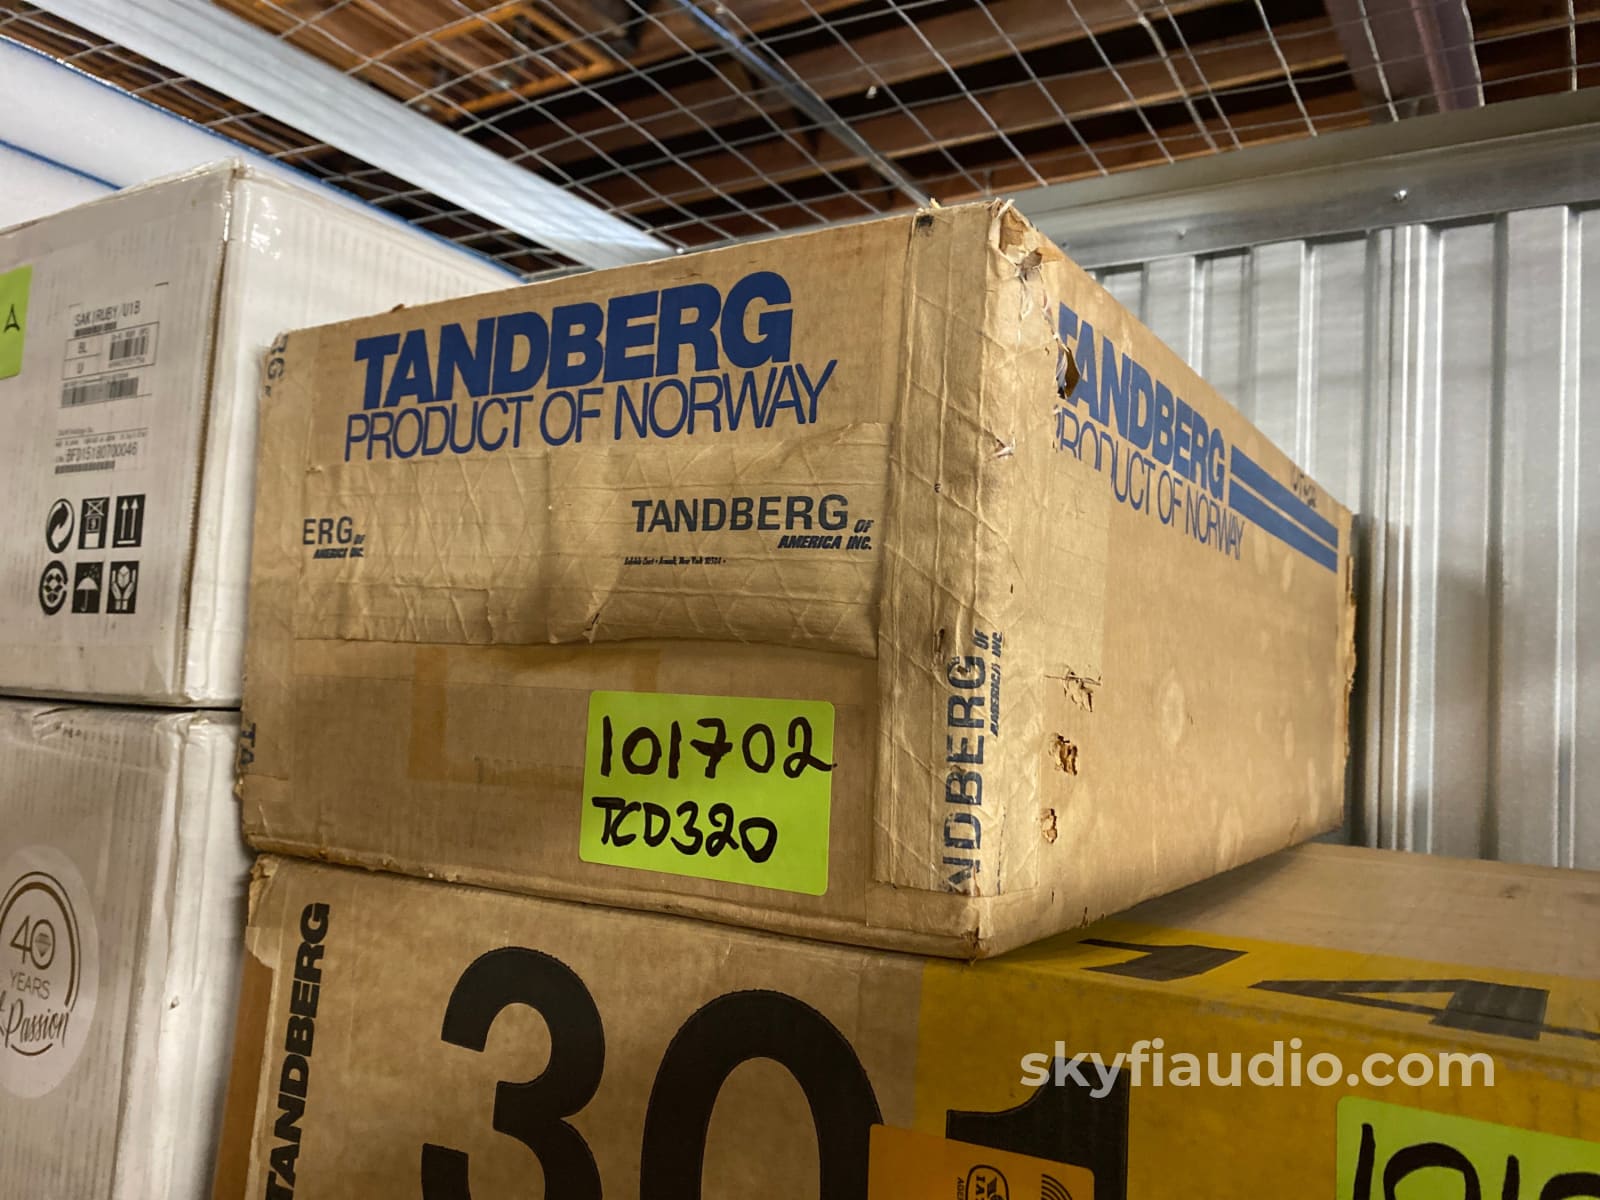 Tandberg Tcd 320 Tape Deck With Cool Vu Meters And Original Box